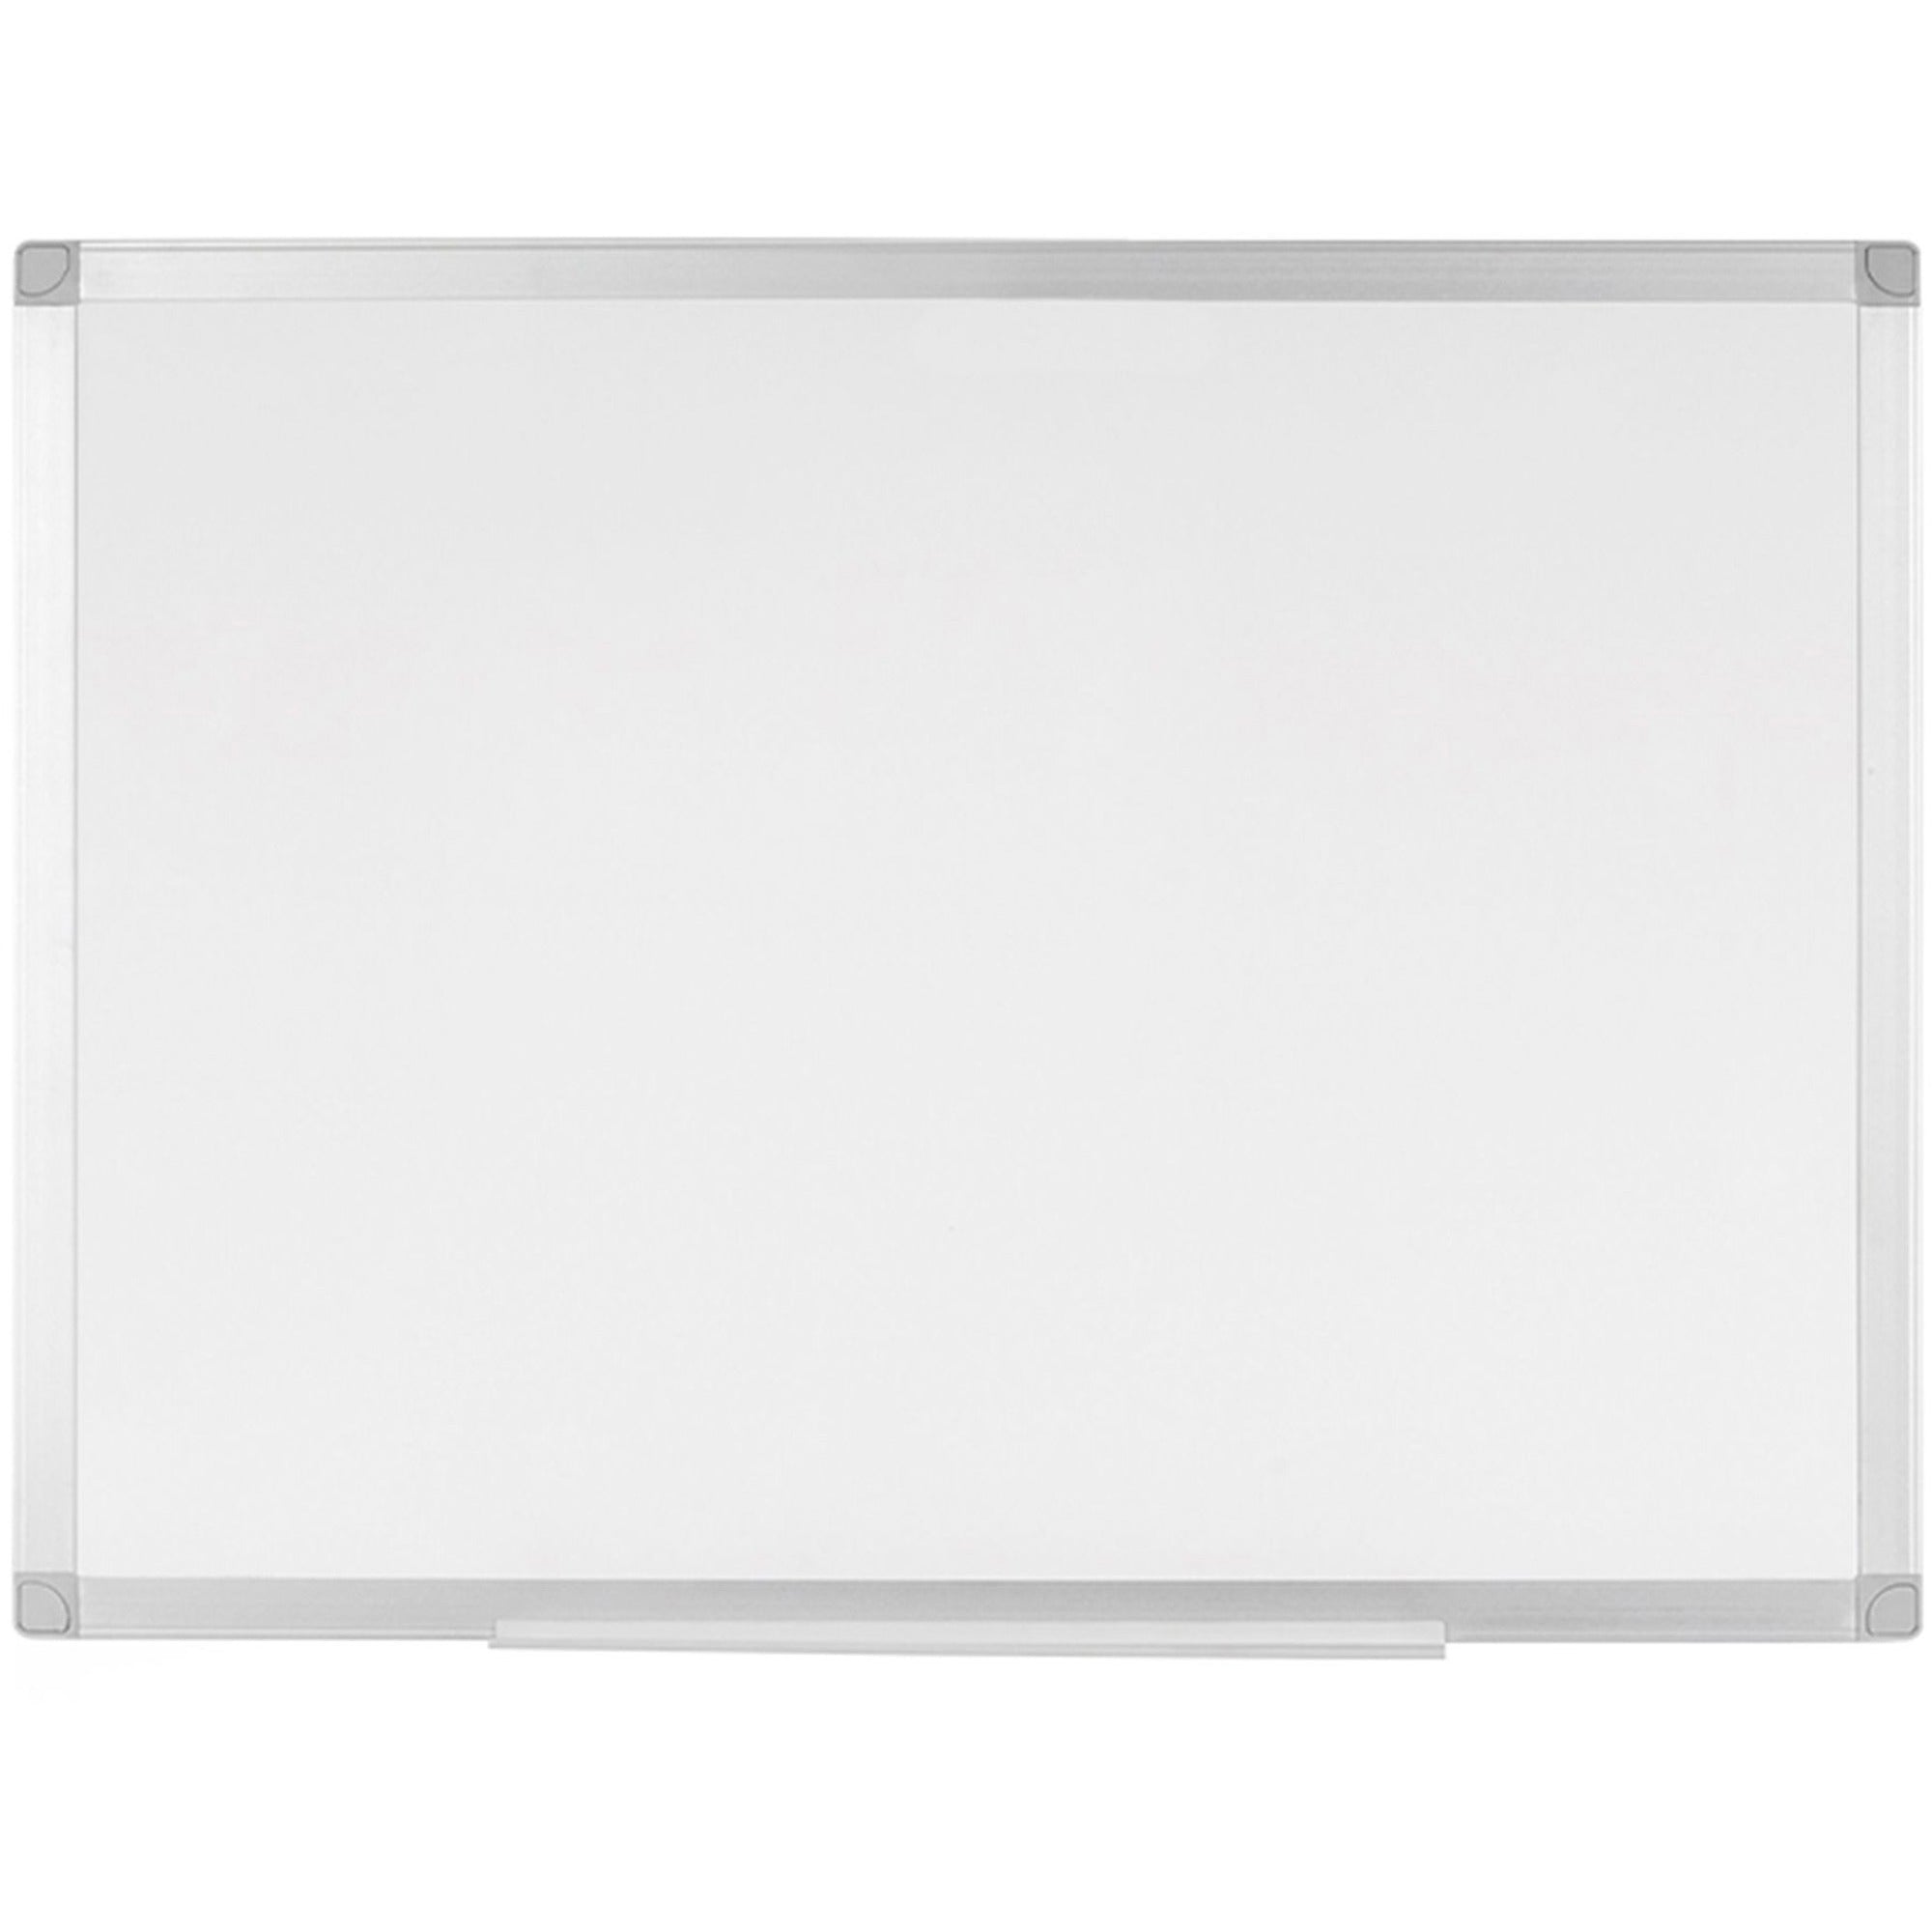 bi-silque-ayda-porcelain-dry-erase-board-24-2-ft-width-x-18-15-ft-height-white-porcelain-surface-aluminum-frame-rectangle-horizontal-vertical-magnetic-1-each_bvccr04999214 - 1